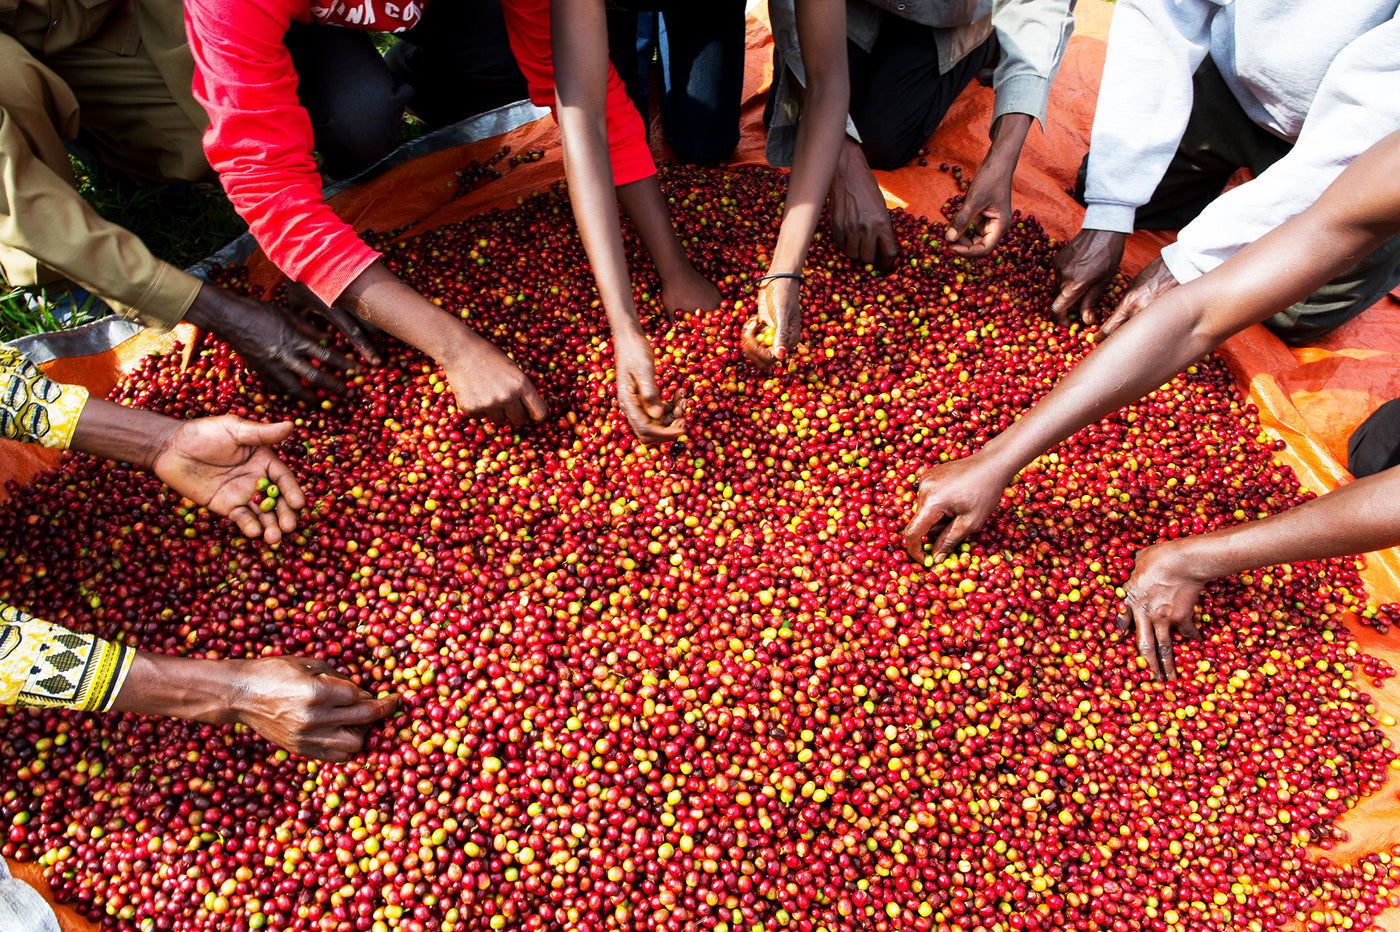 Coffee bean sorting in Rwanda